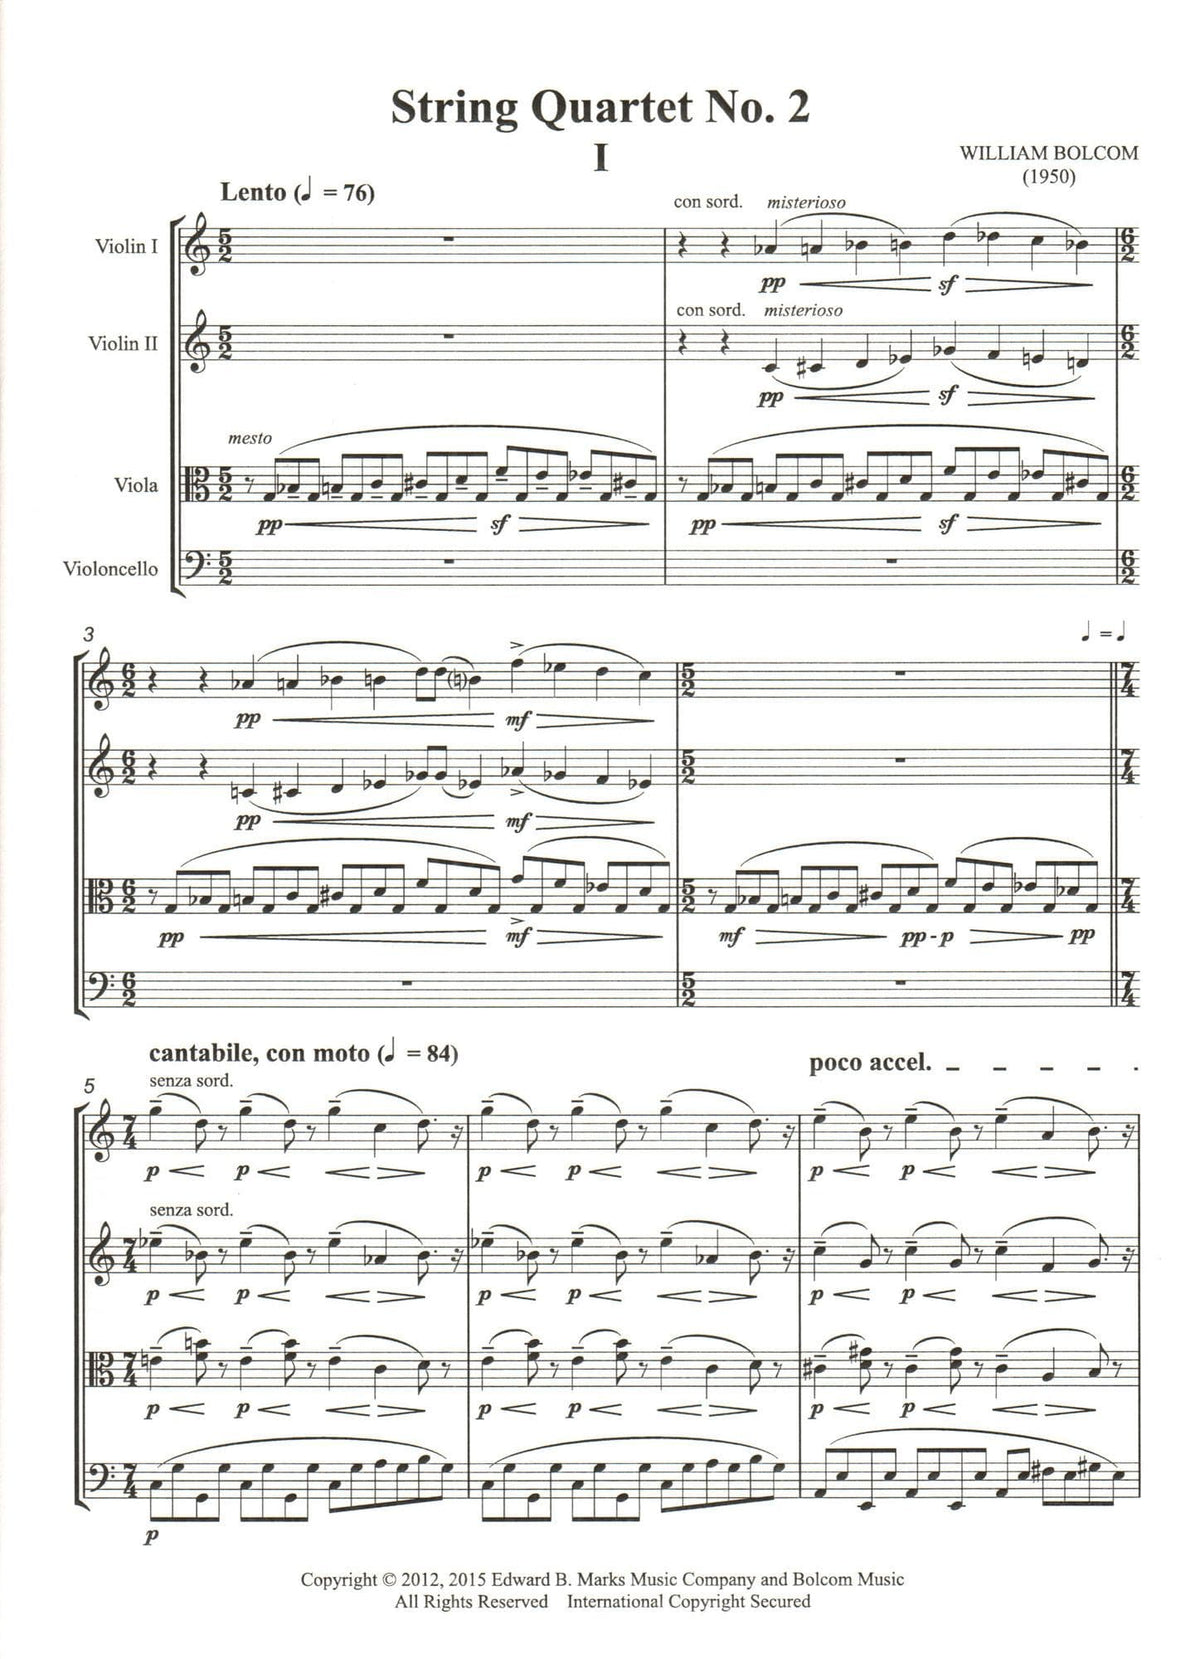 Bolcom, William - String Quartet No. 2 - Score and Parts - Edward B. Marks Music Company